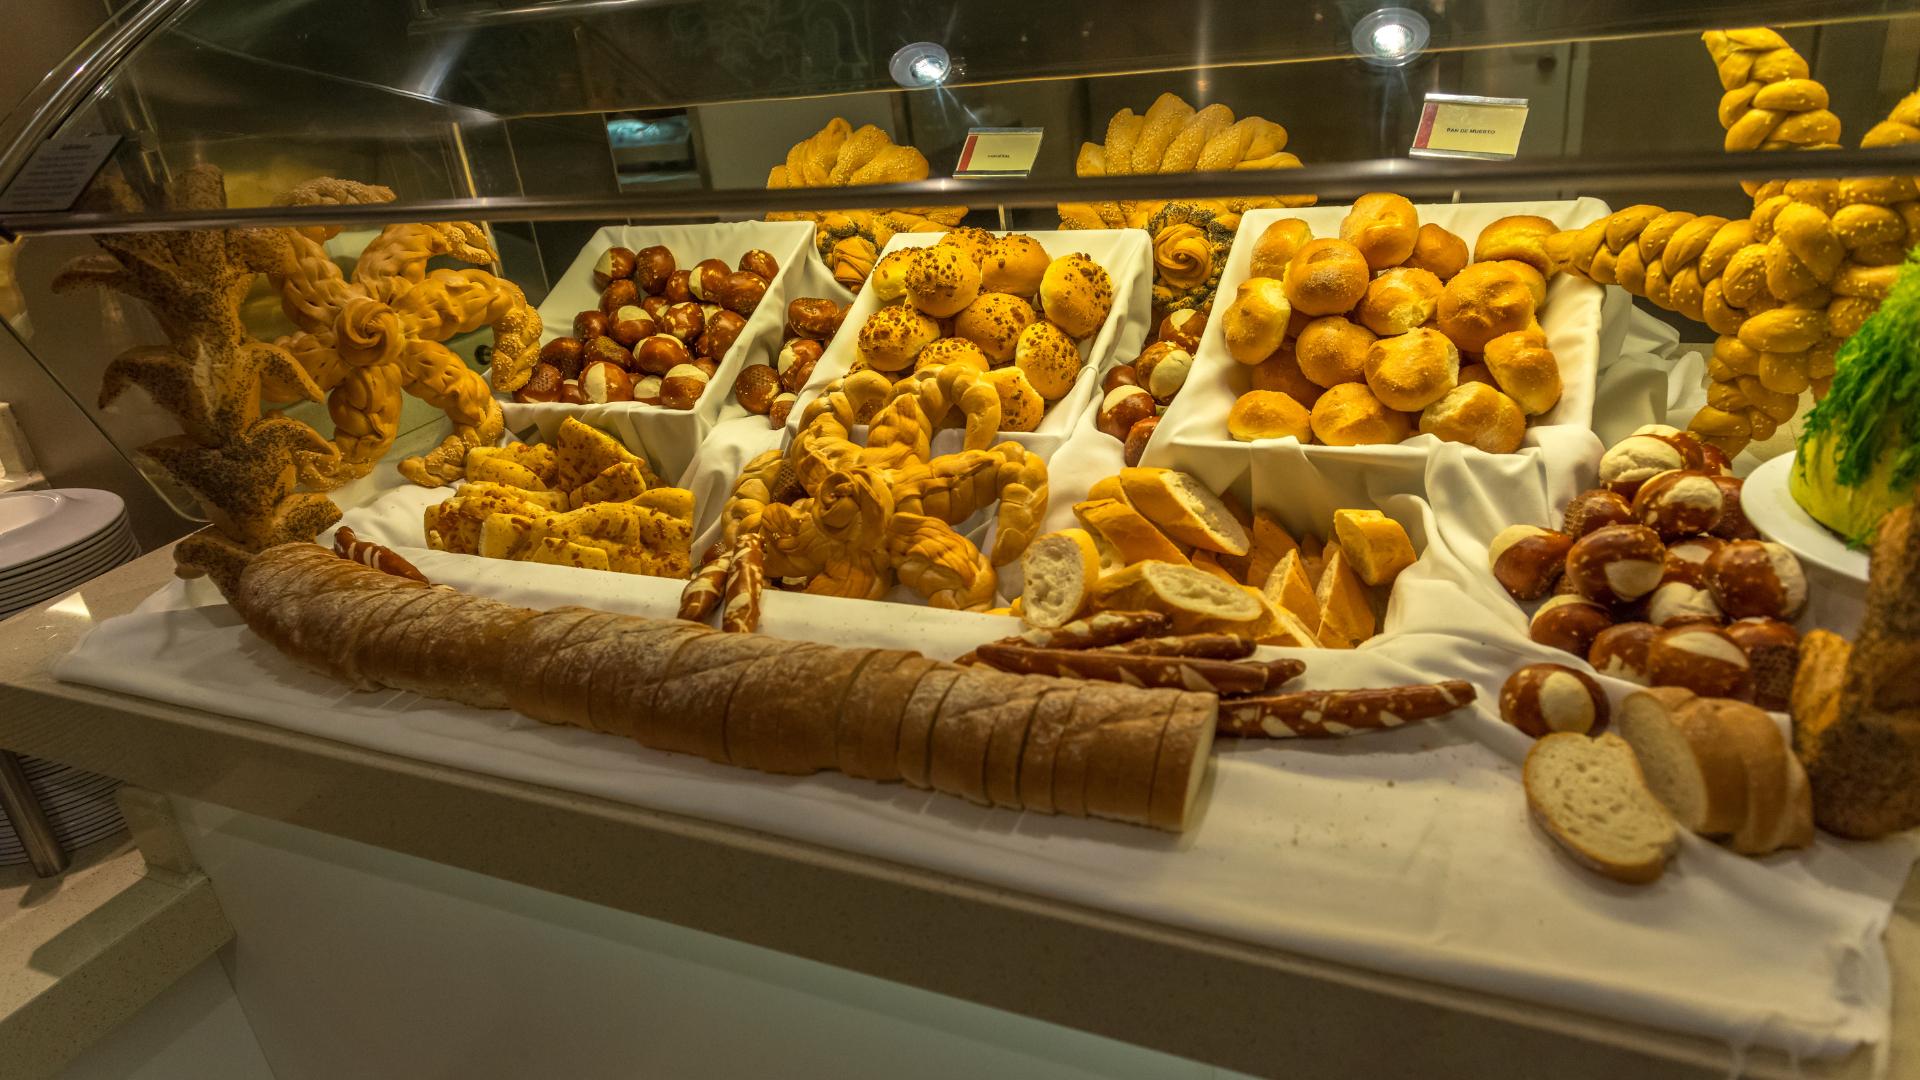 beautiful bread inside a heated bakery display